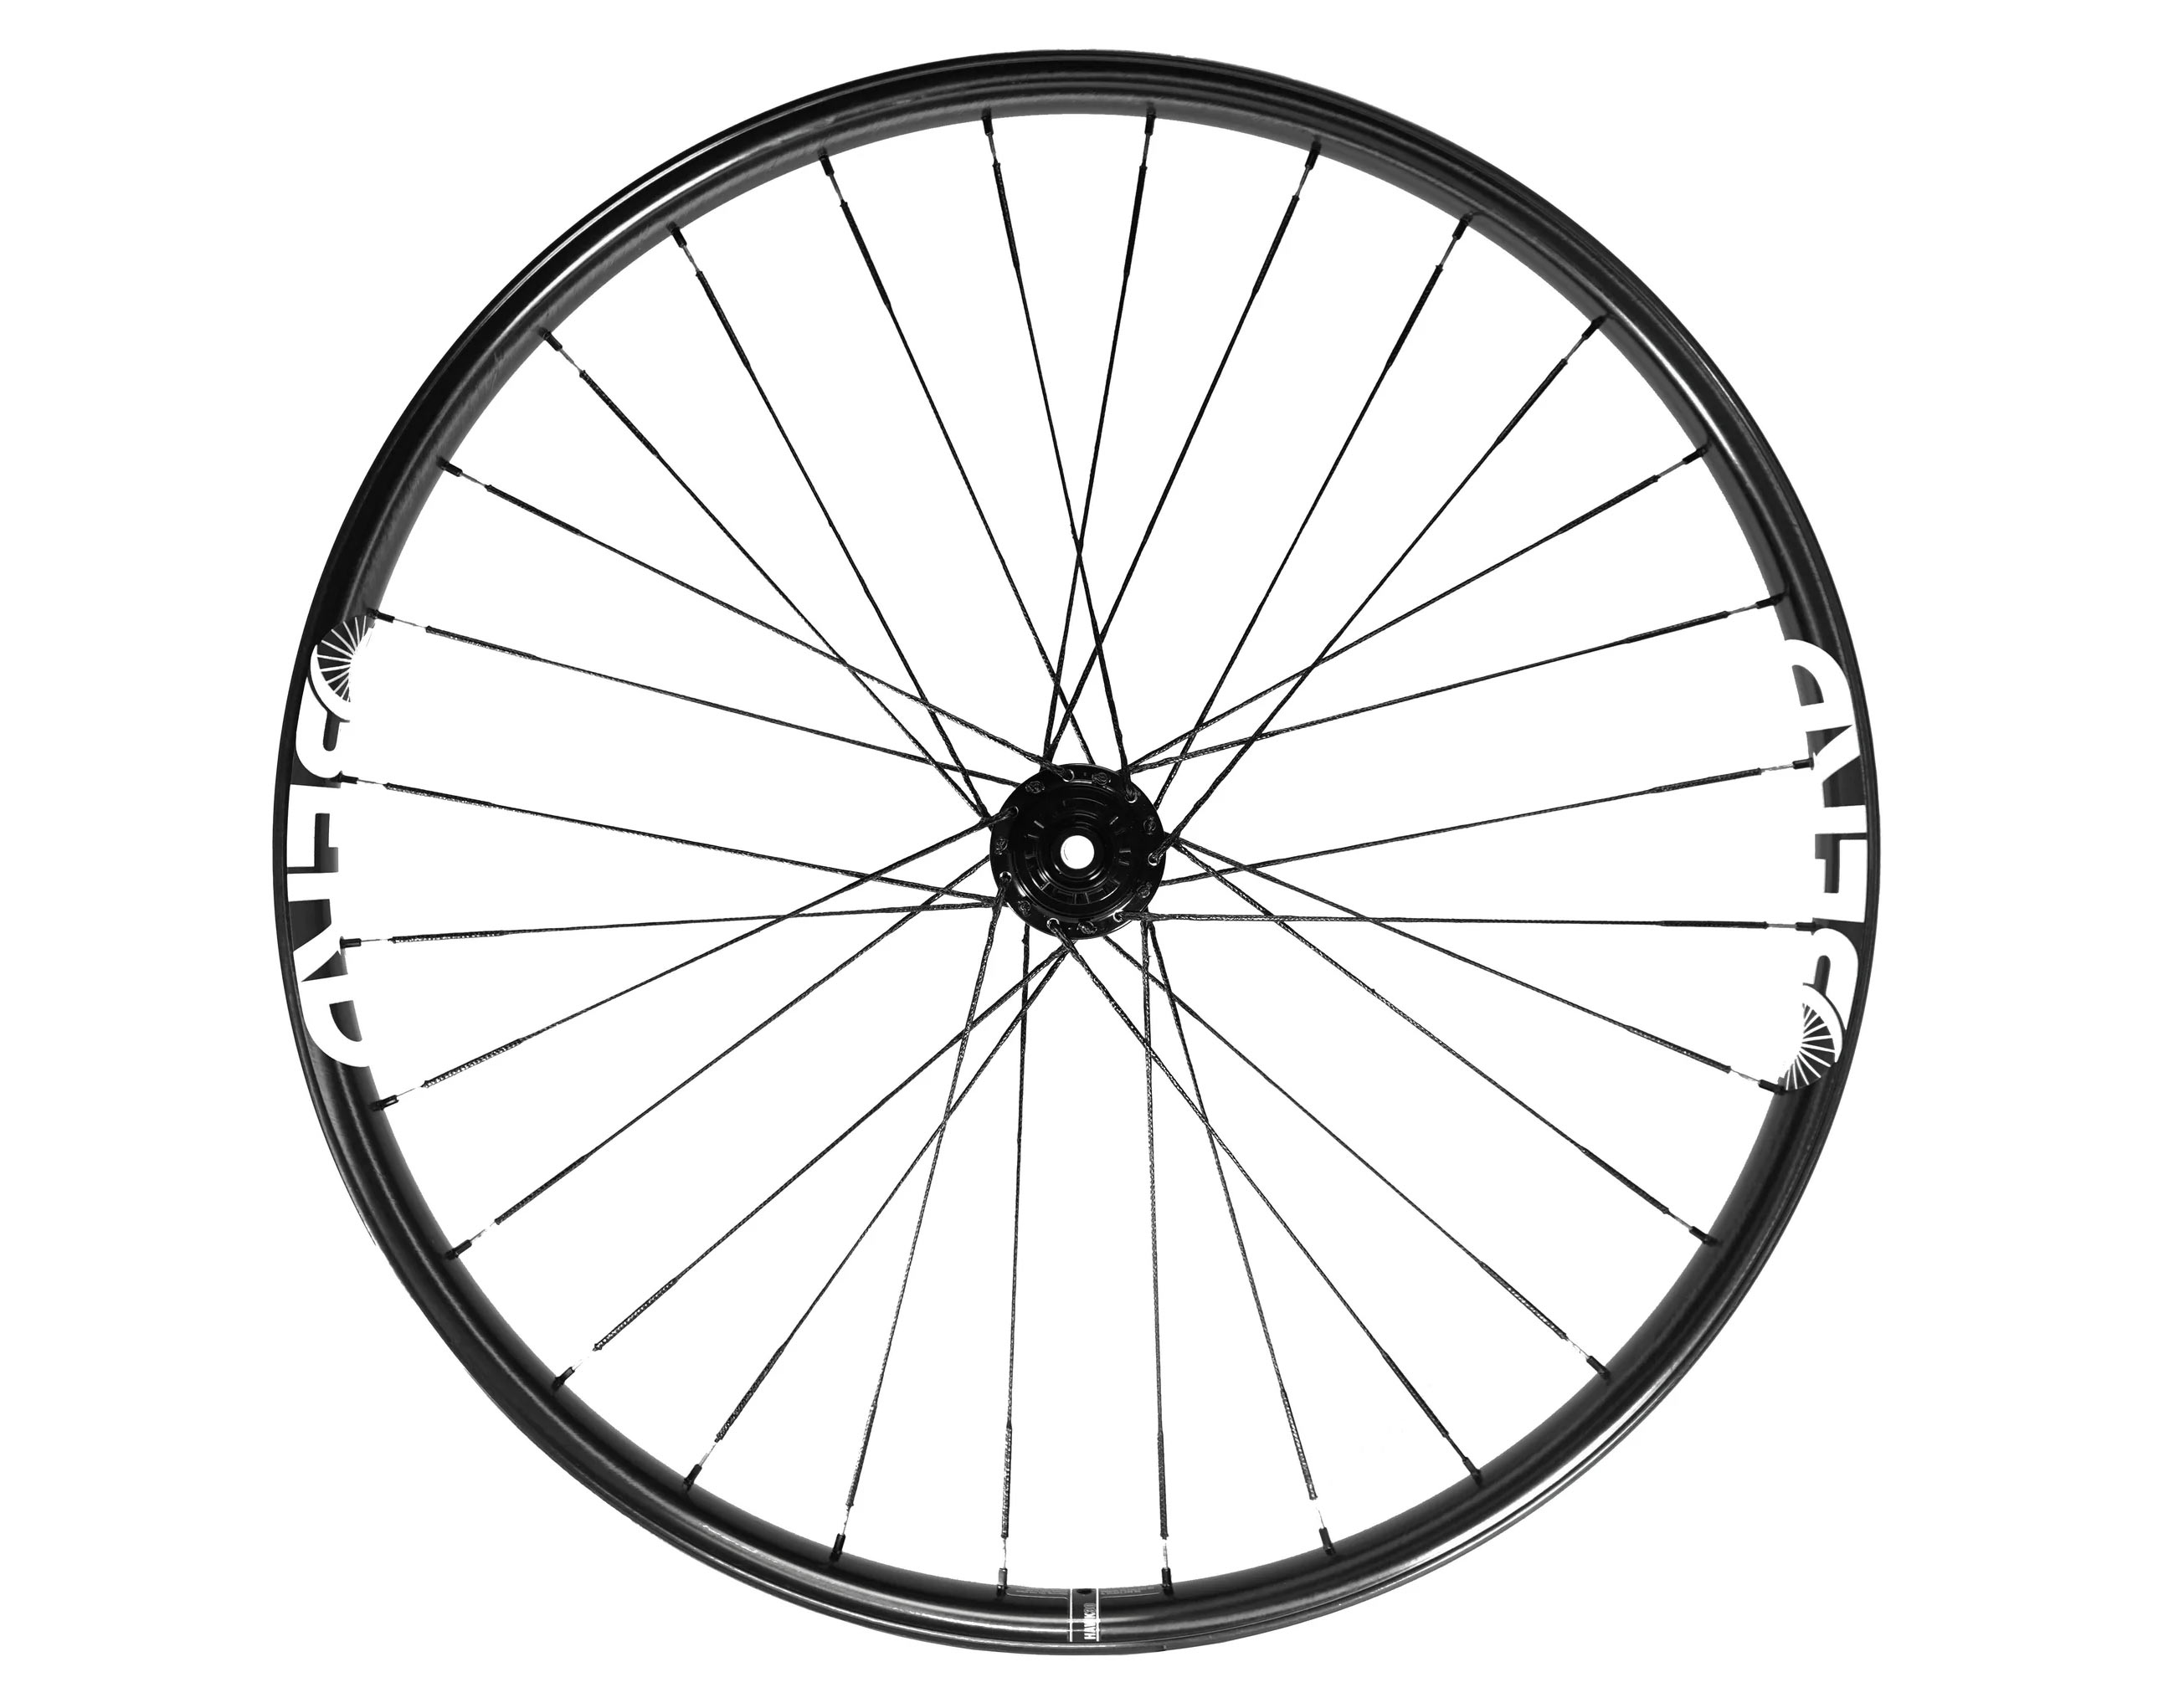 berd hawk30 enduro mountain bike wheels with black string spokes